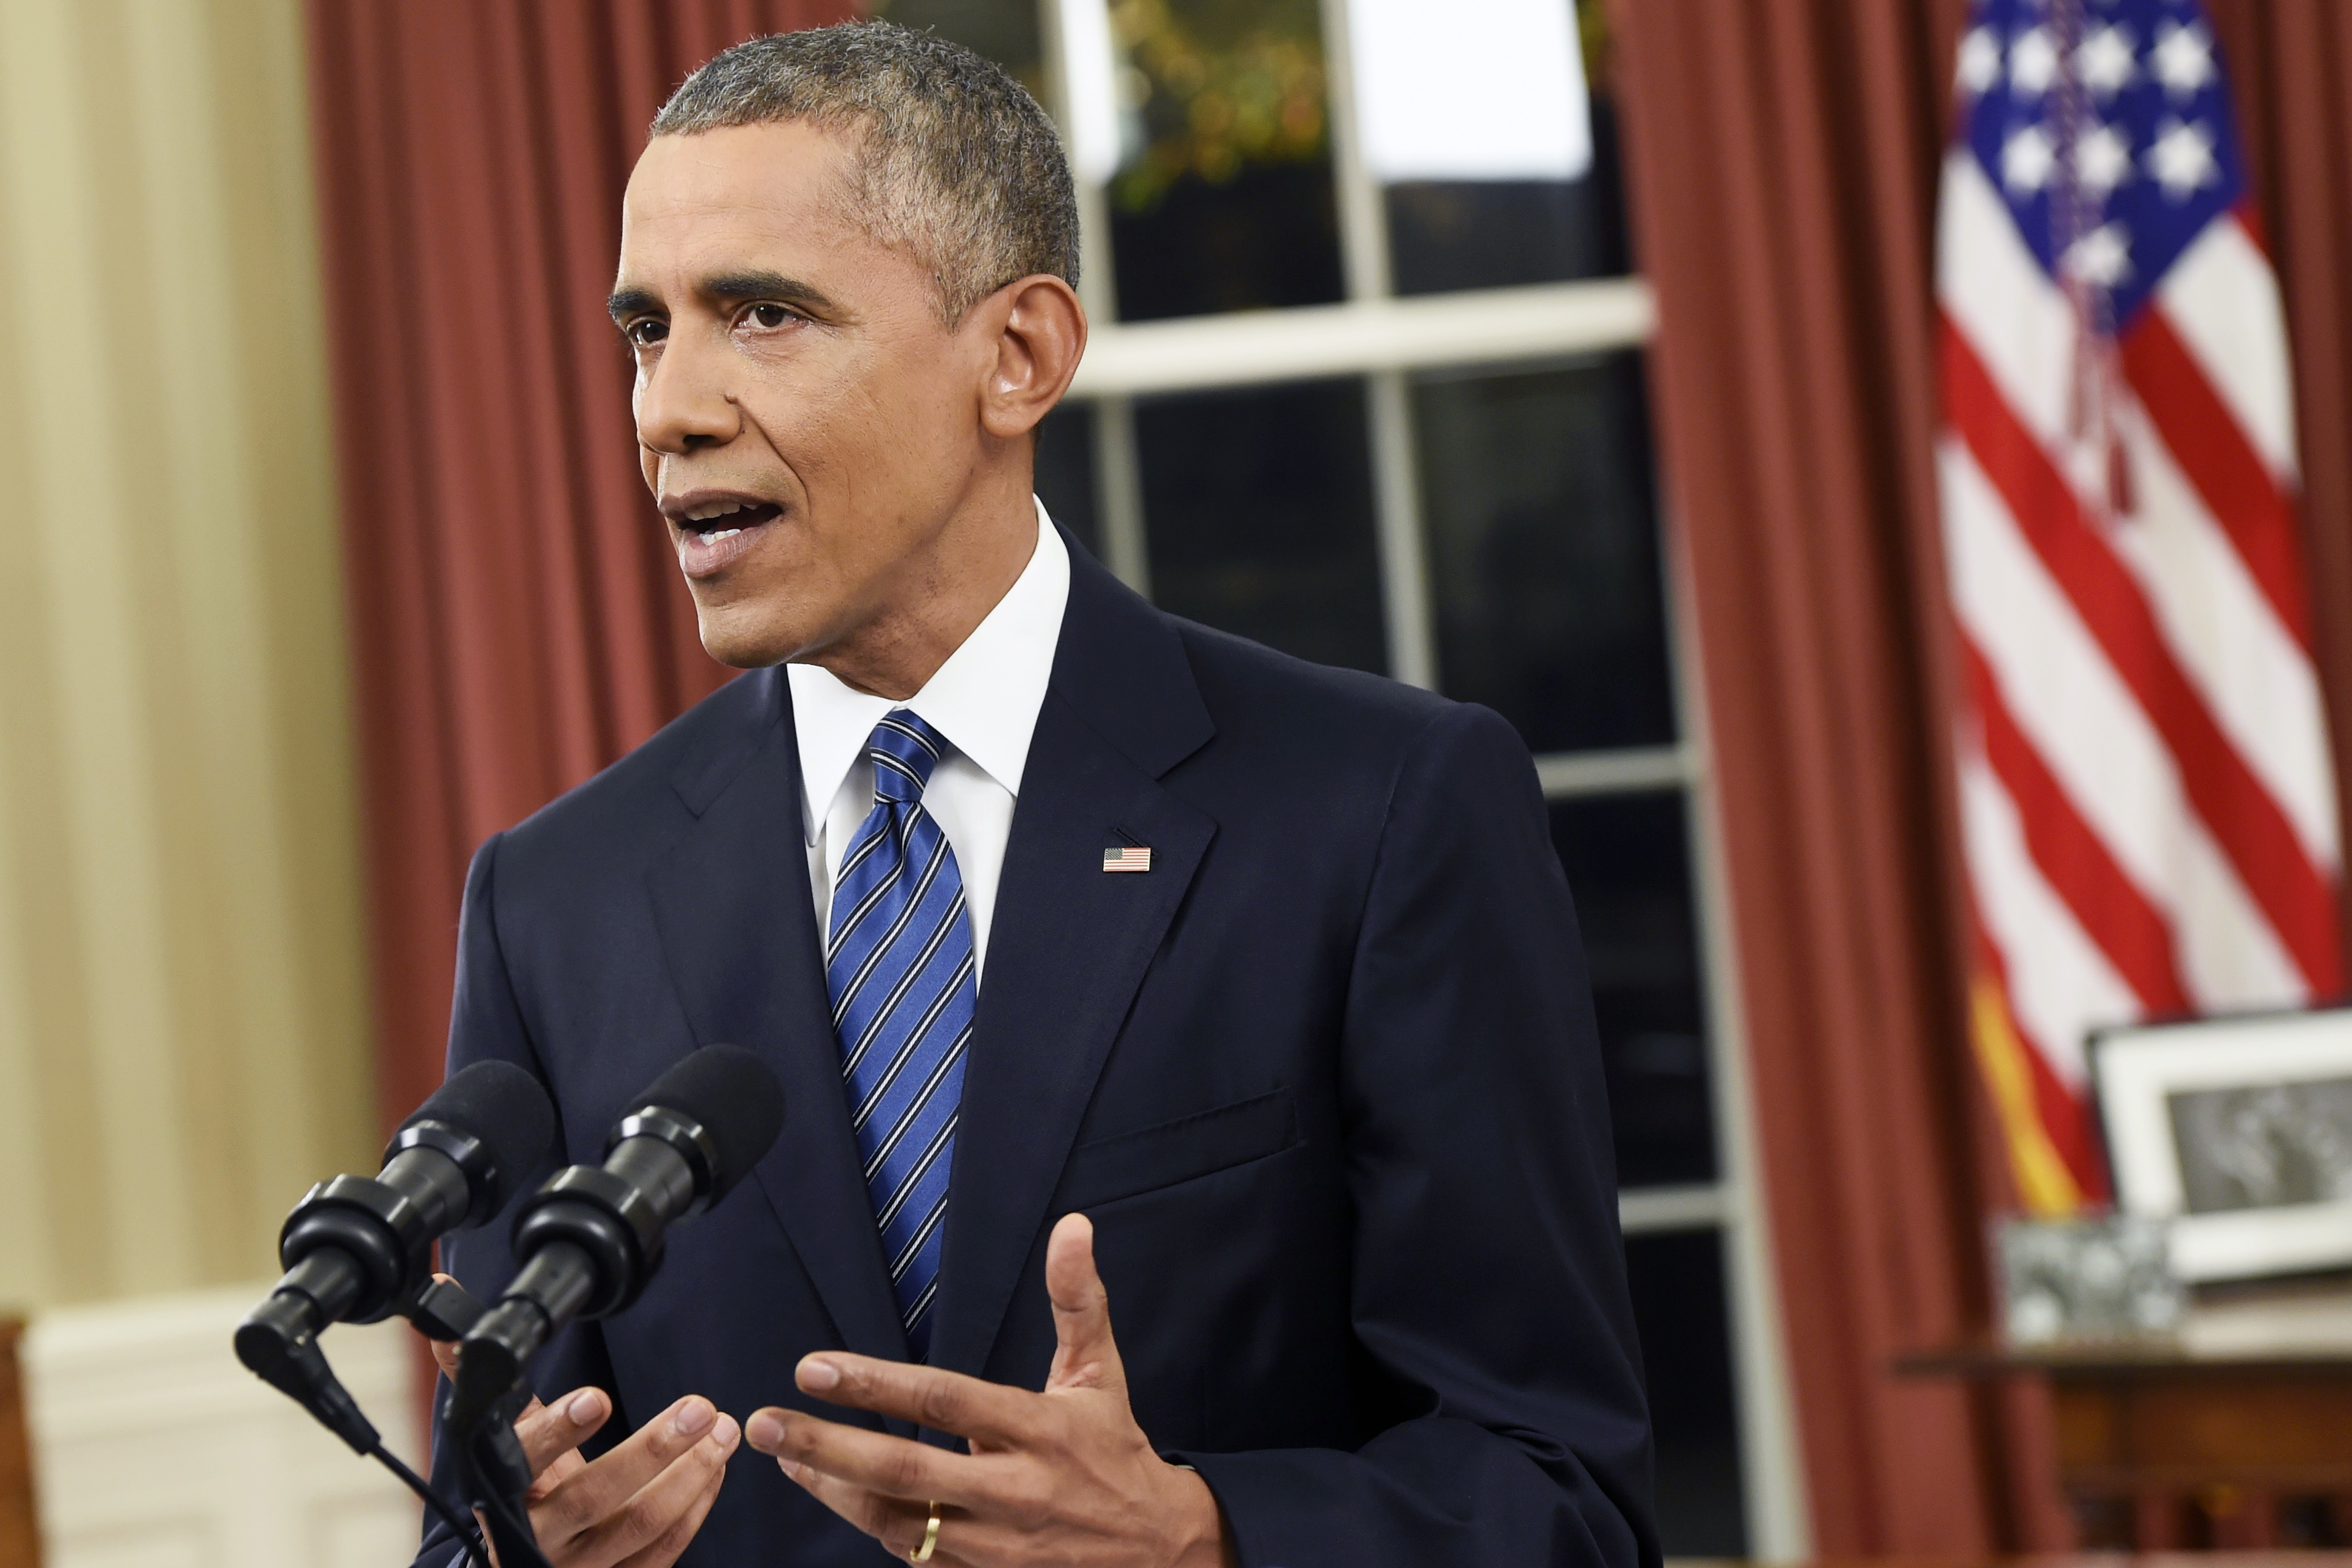 Obama Addresses The Nation As FBI Pursues Terrorism In California Attack